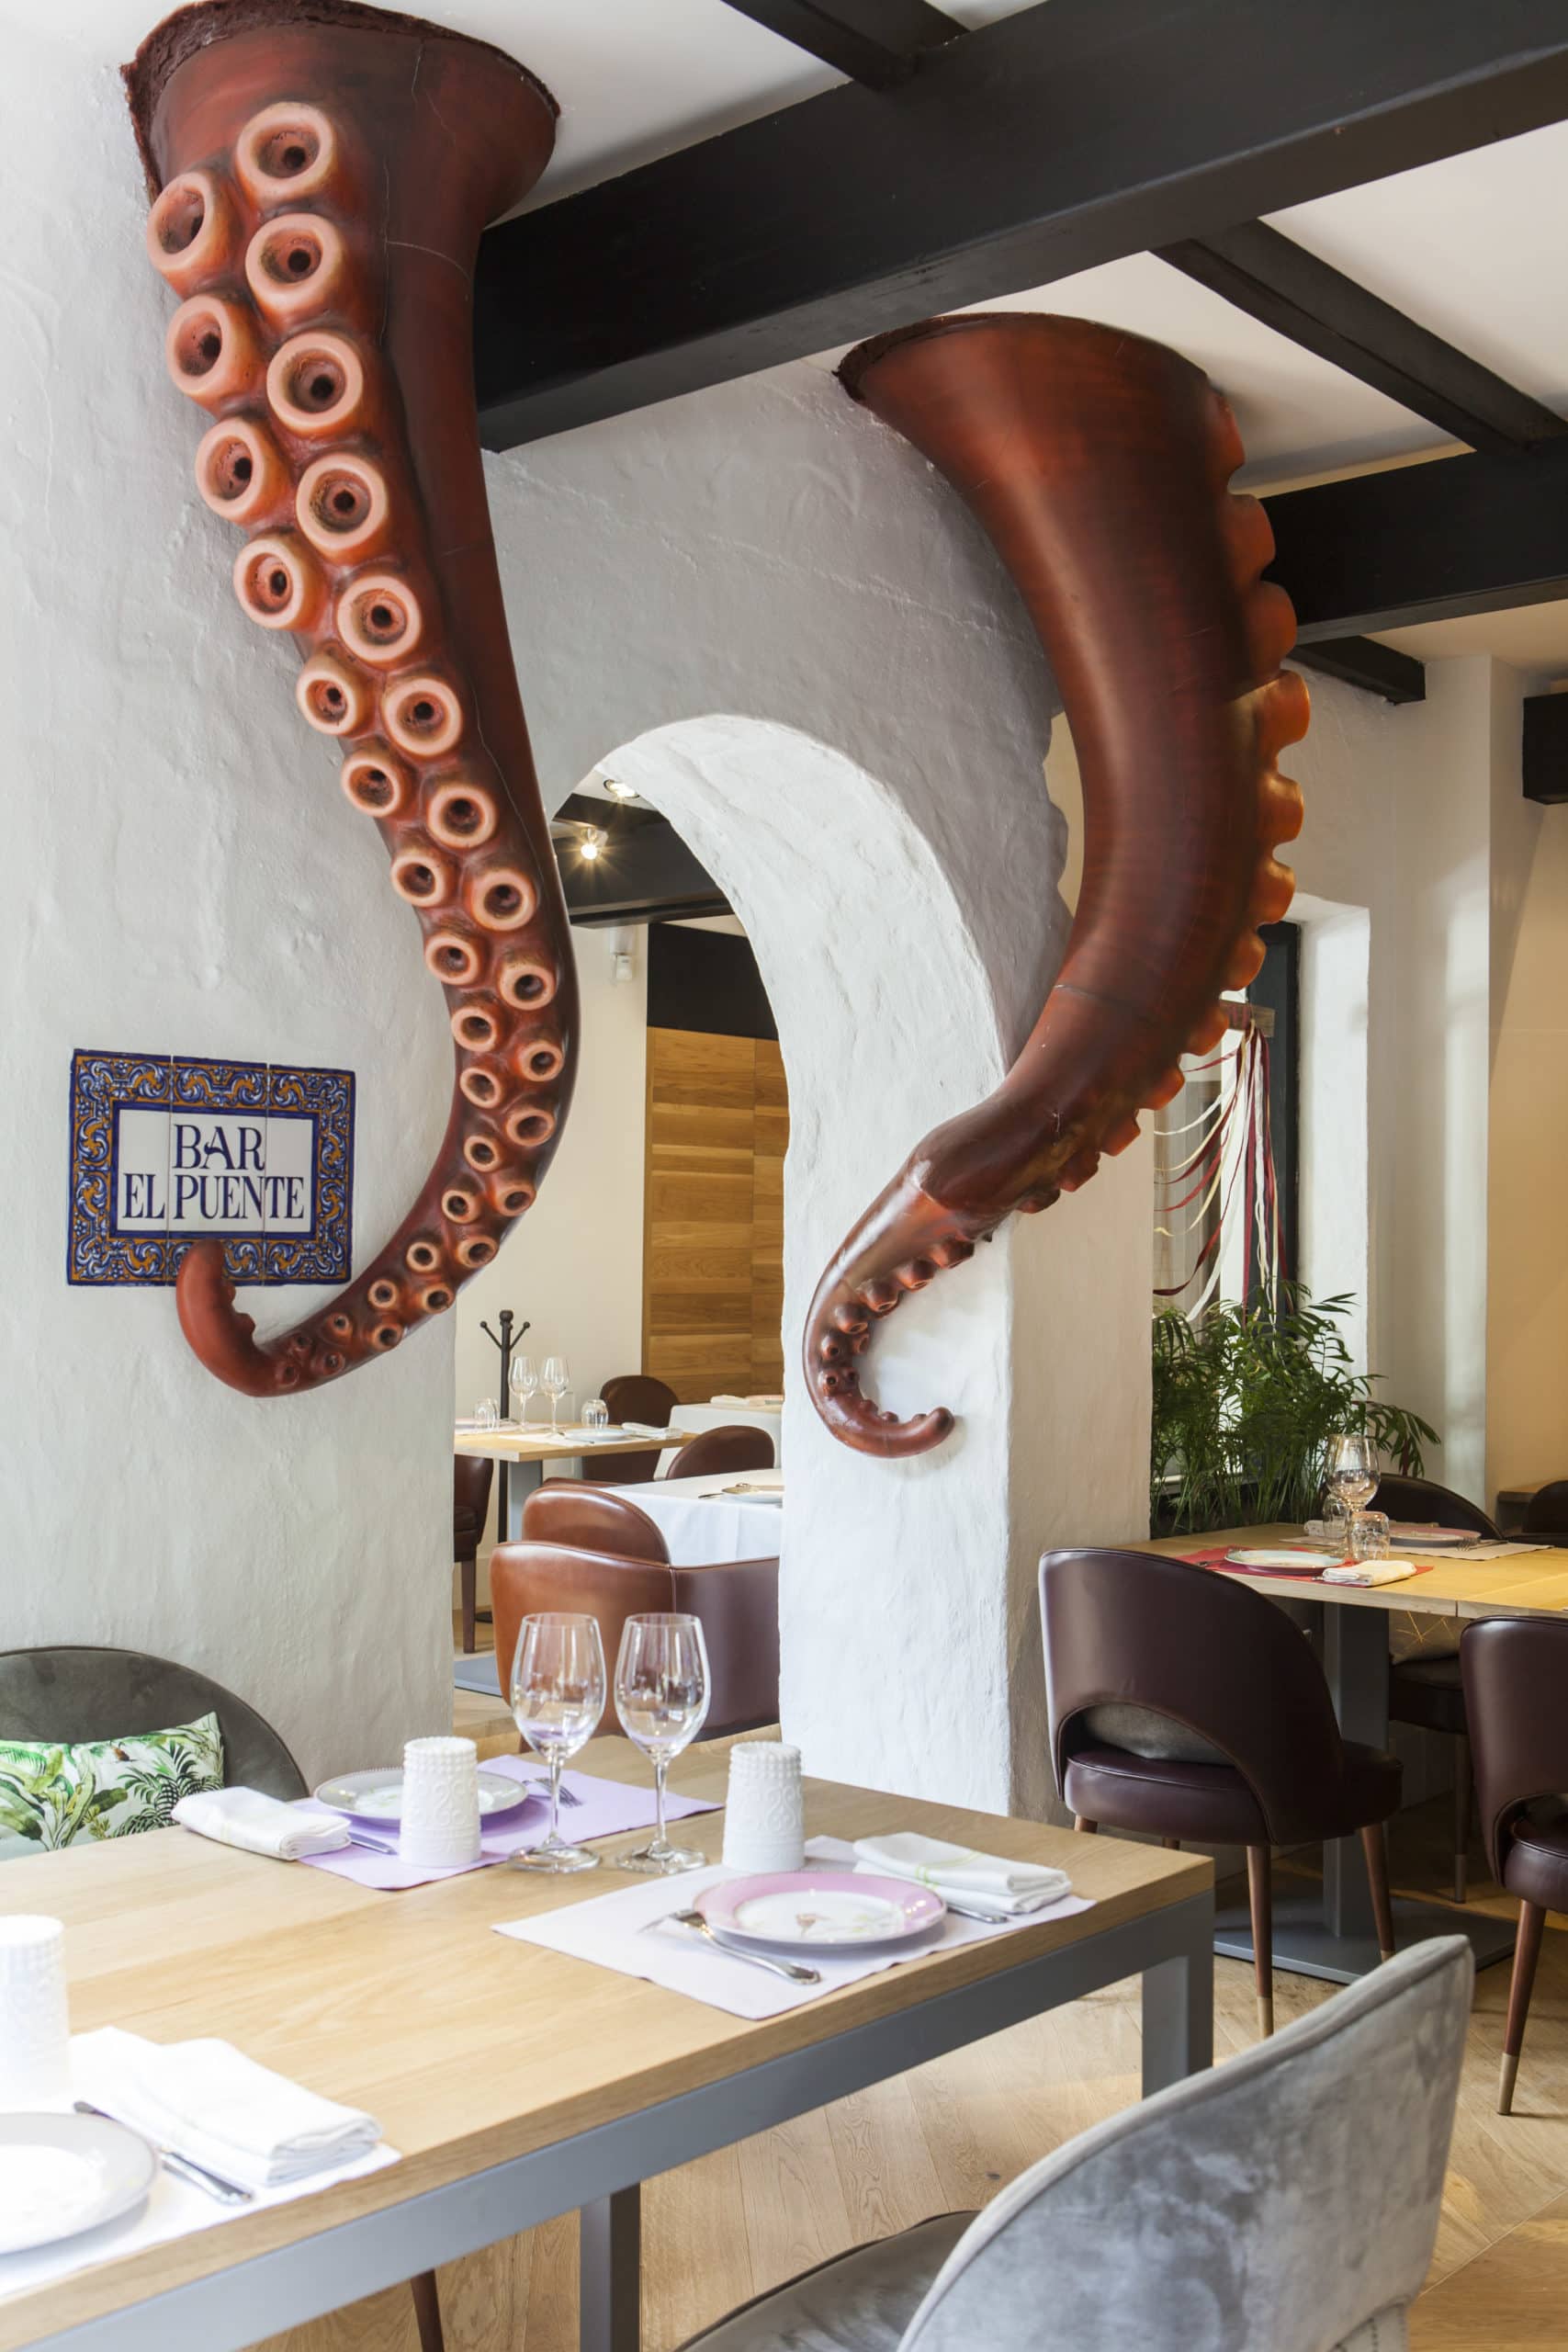 BiBo Marbella: mind-blowing gastronomic fusion and a funky interior